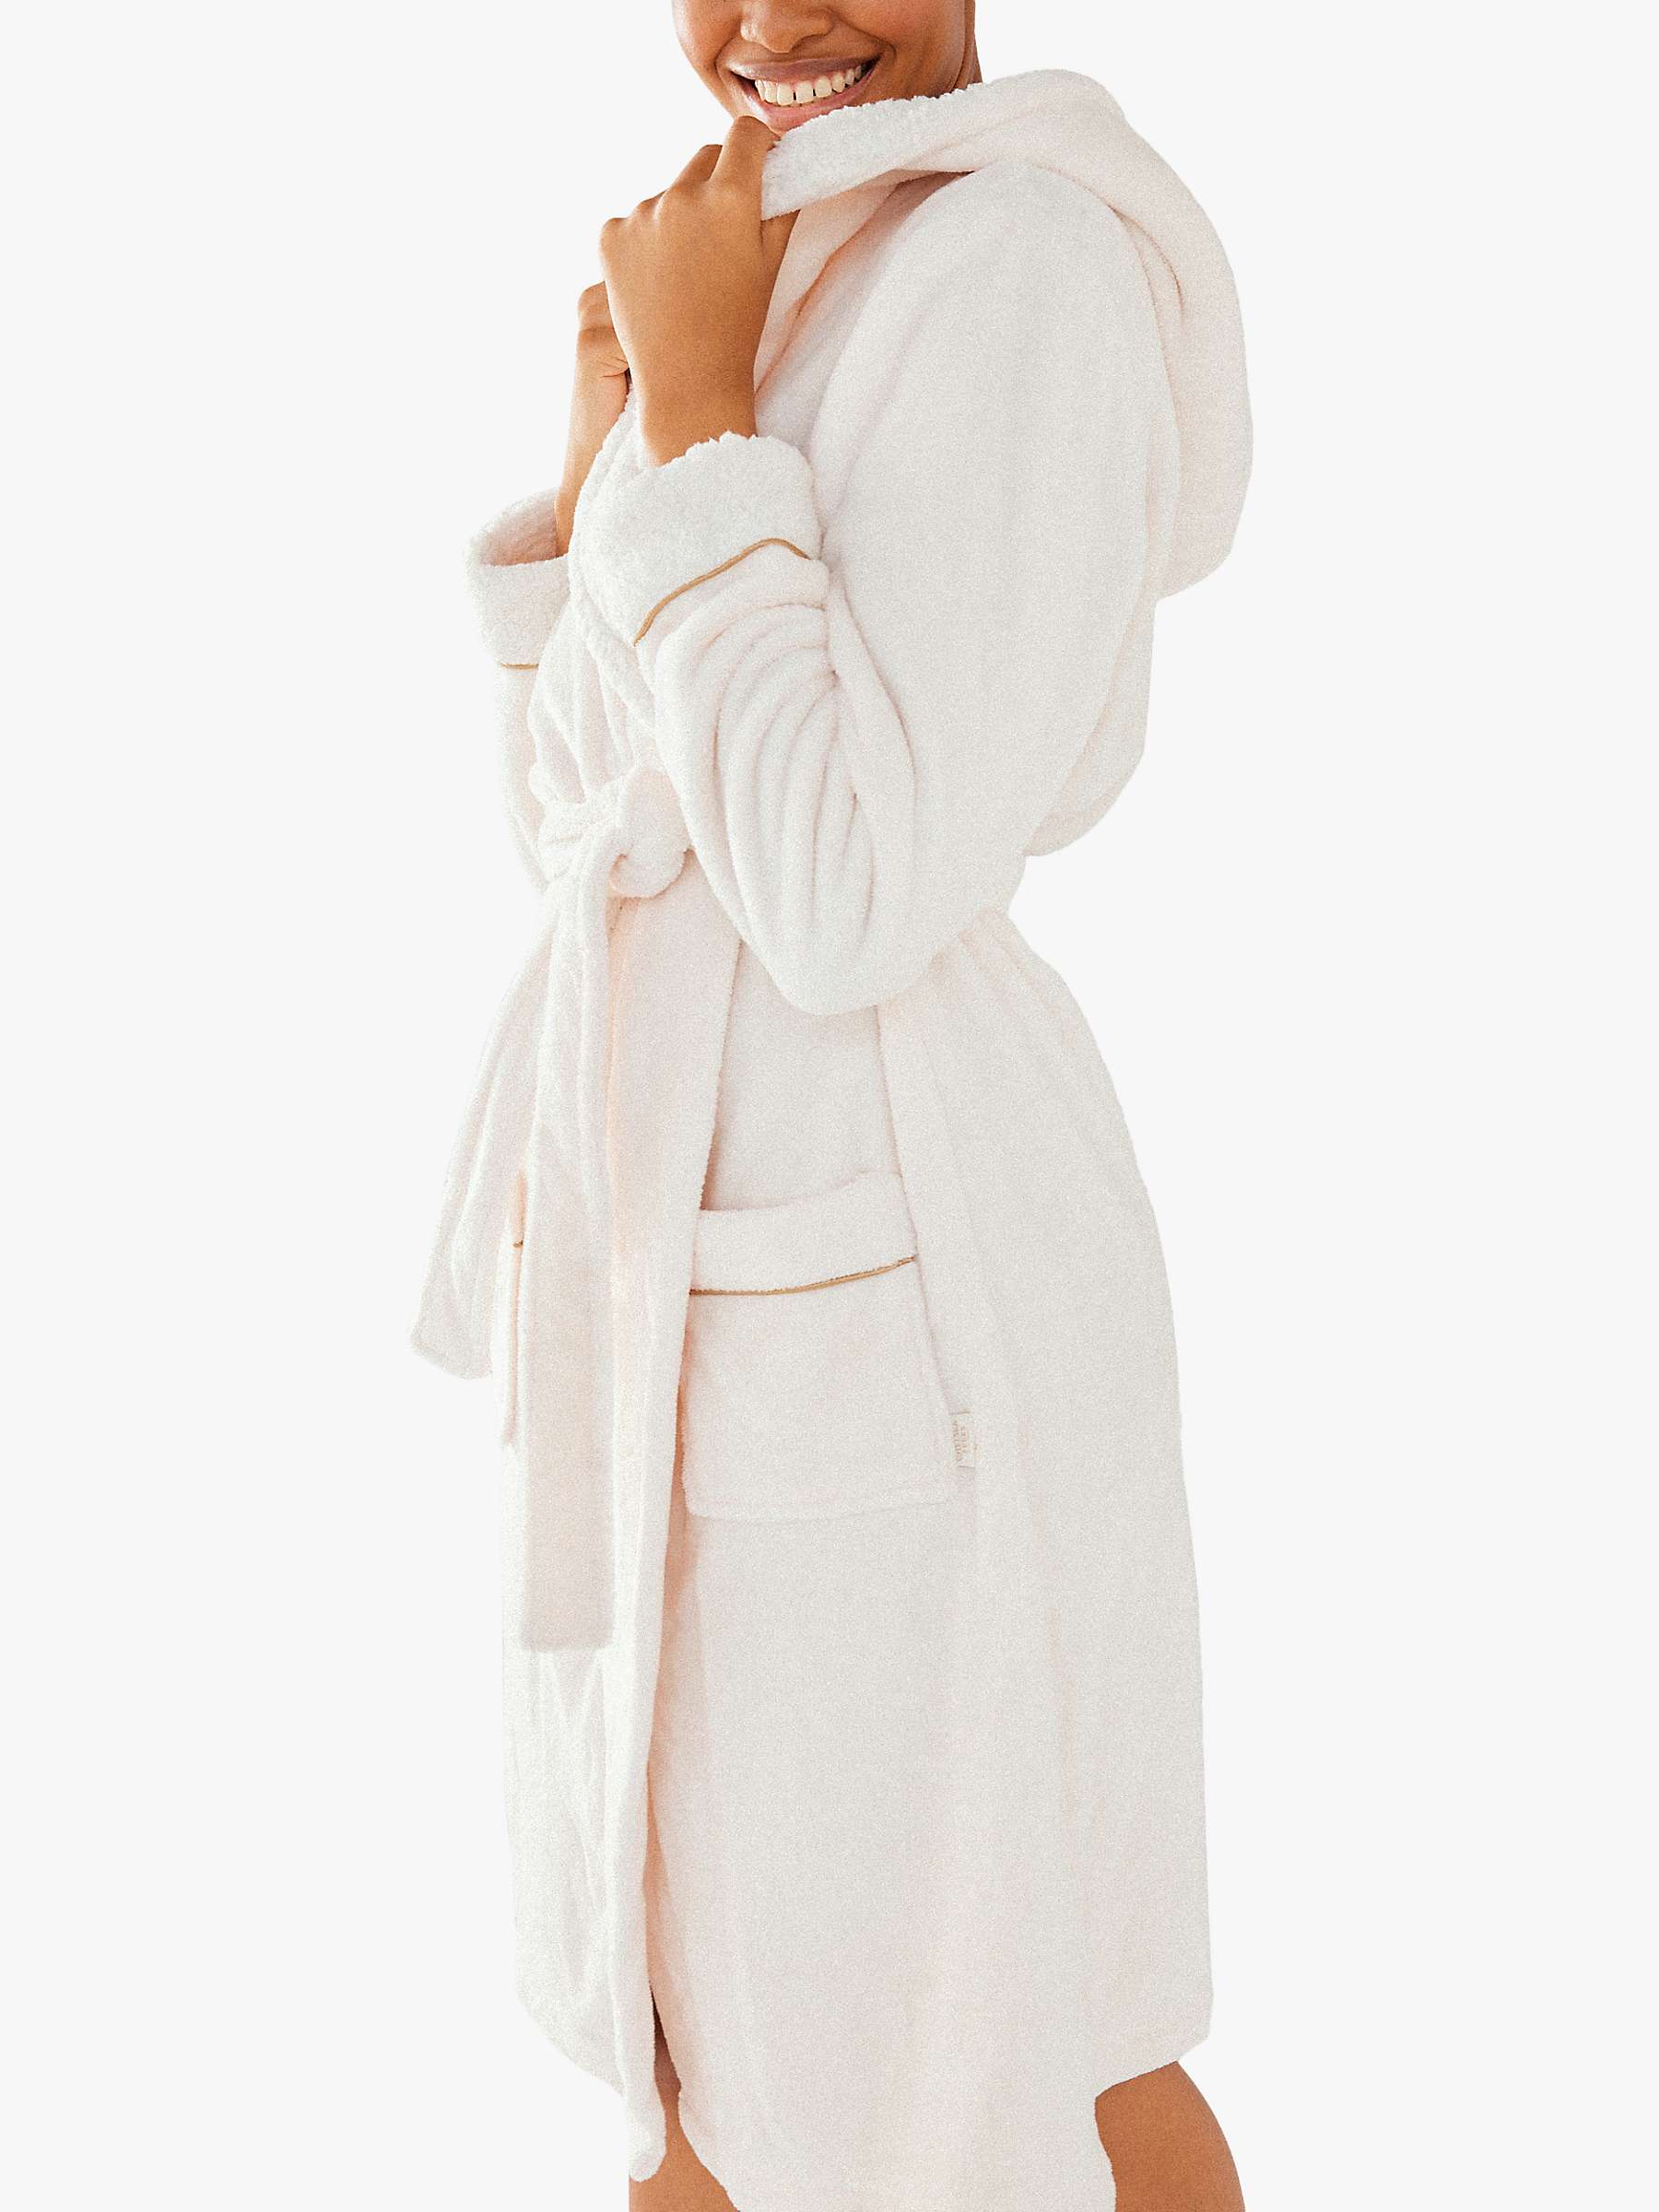 Buy Chelsea Peers Plain Fluffy Hooded Dressing Gown Online at johnlewis.com